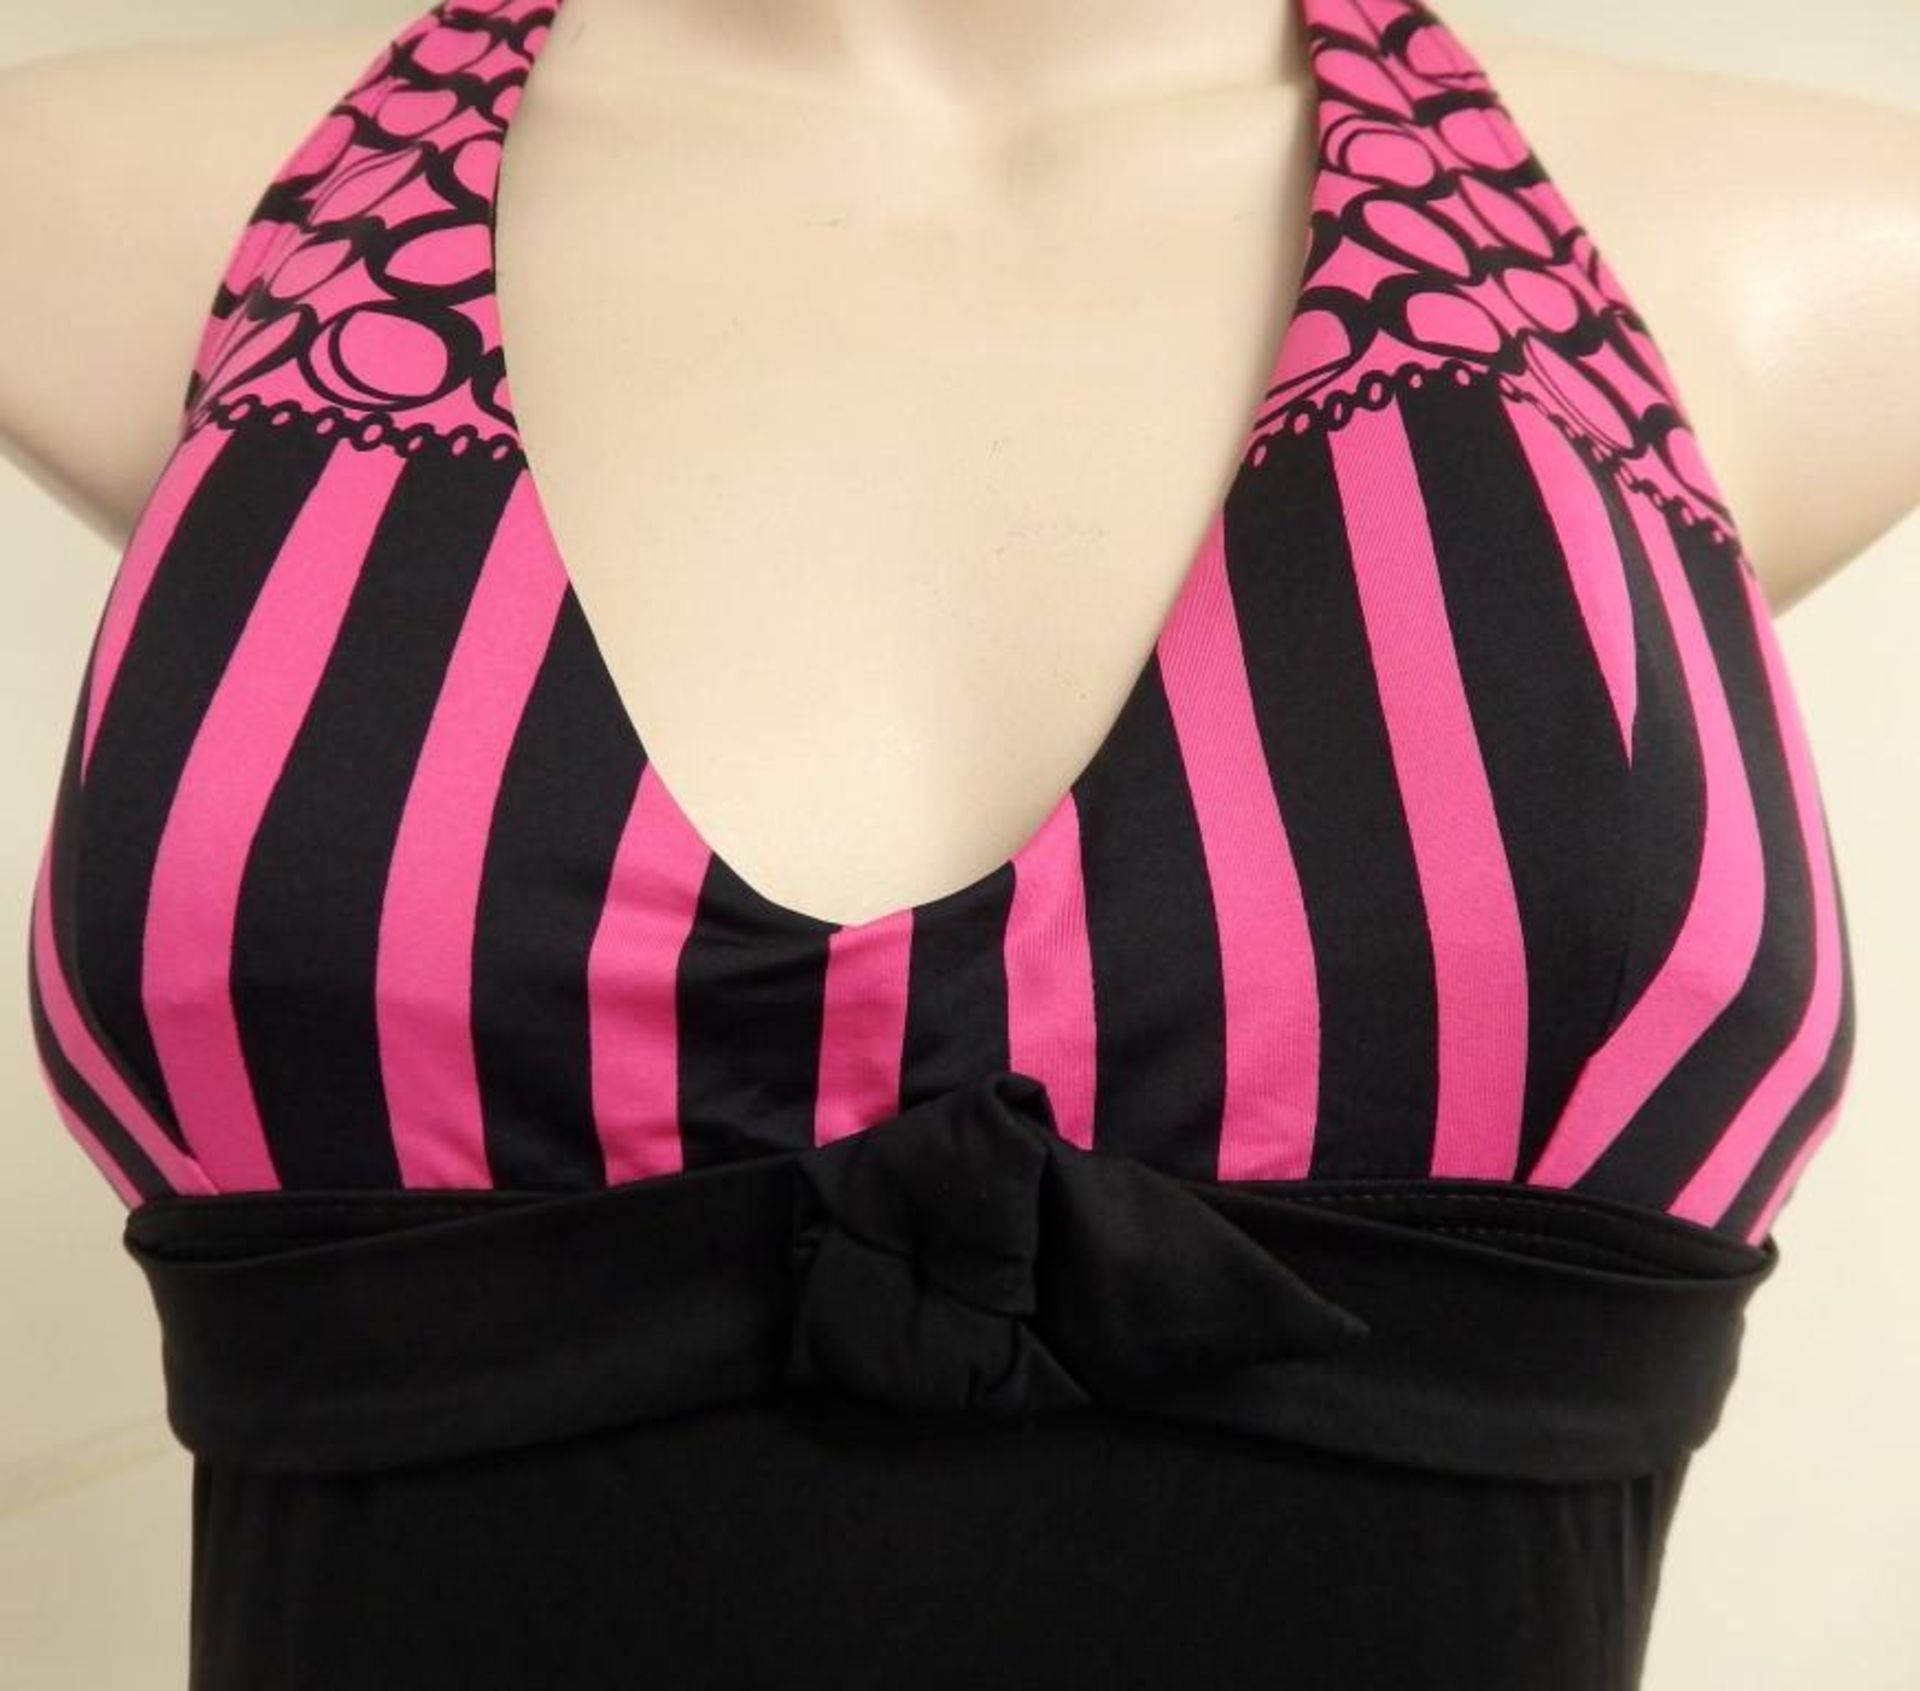 1 x Rasurel - Black/Pink patterned - Borneo Swimsuit - R20434 - Size 2C - UK 32 - Fr 85 - EU/Int 70 - Image 5 of 7